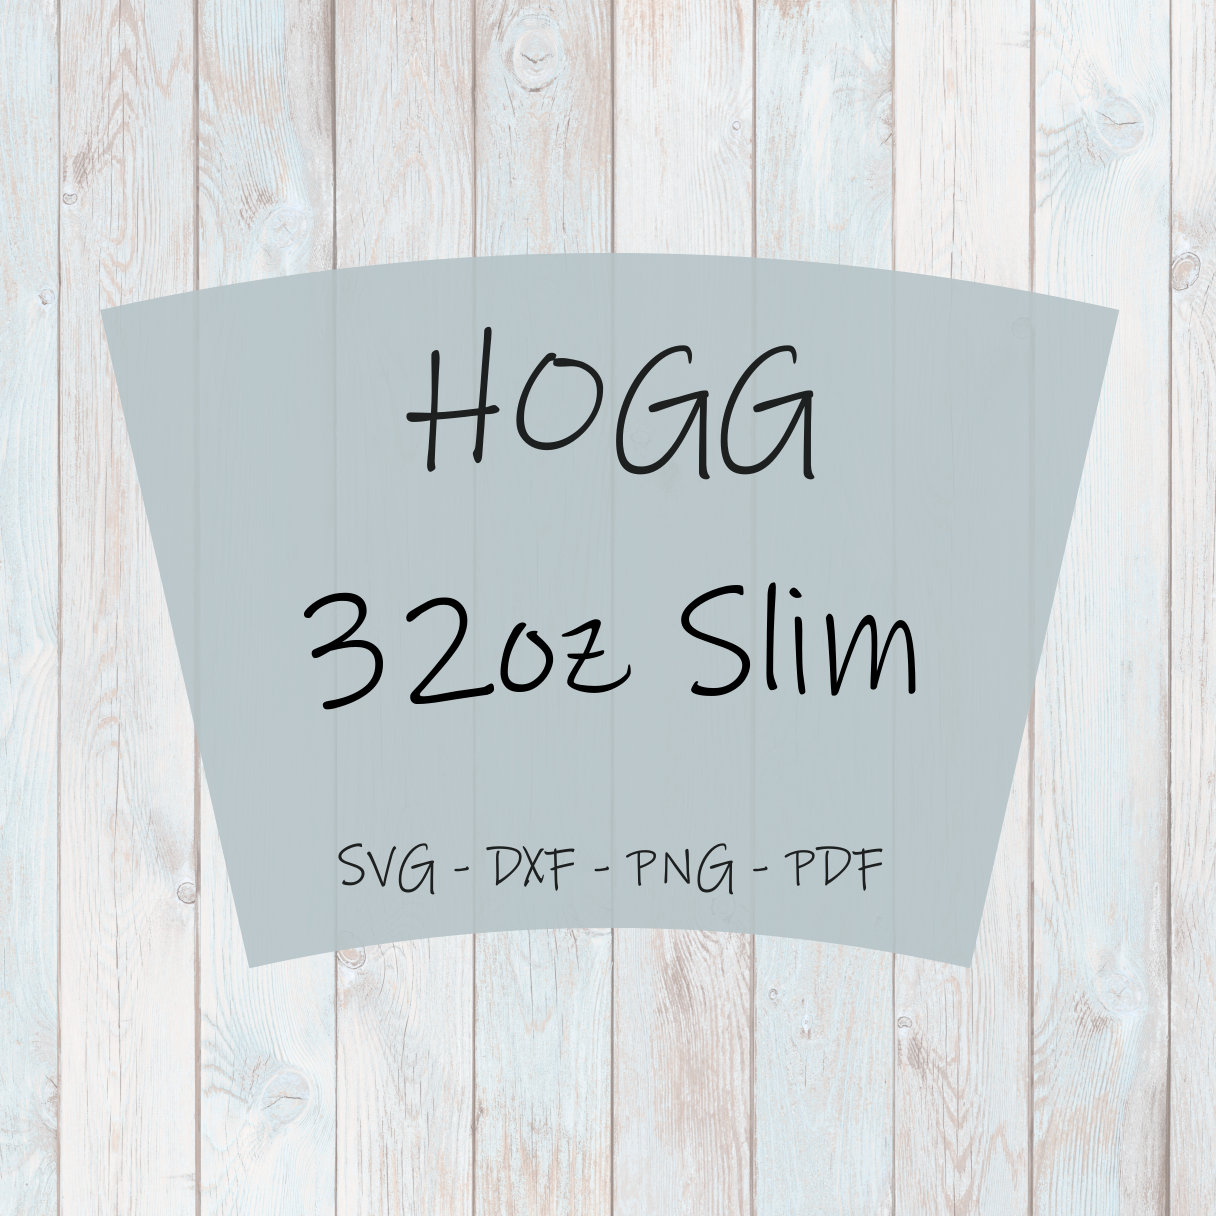 Hogg Plus Duo 15oz Tumbler Template, Hogg Skinny Duo Plus Svg for tumbler  Hogg 15 oz sublimation Template Hogg 15oz Sublimation Tumbler Docx